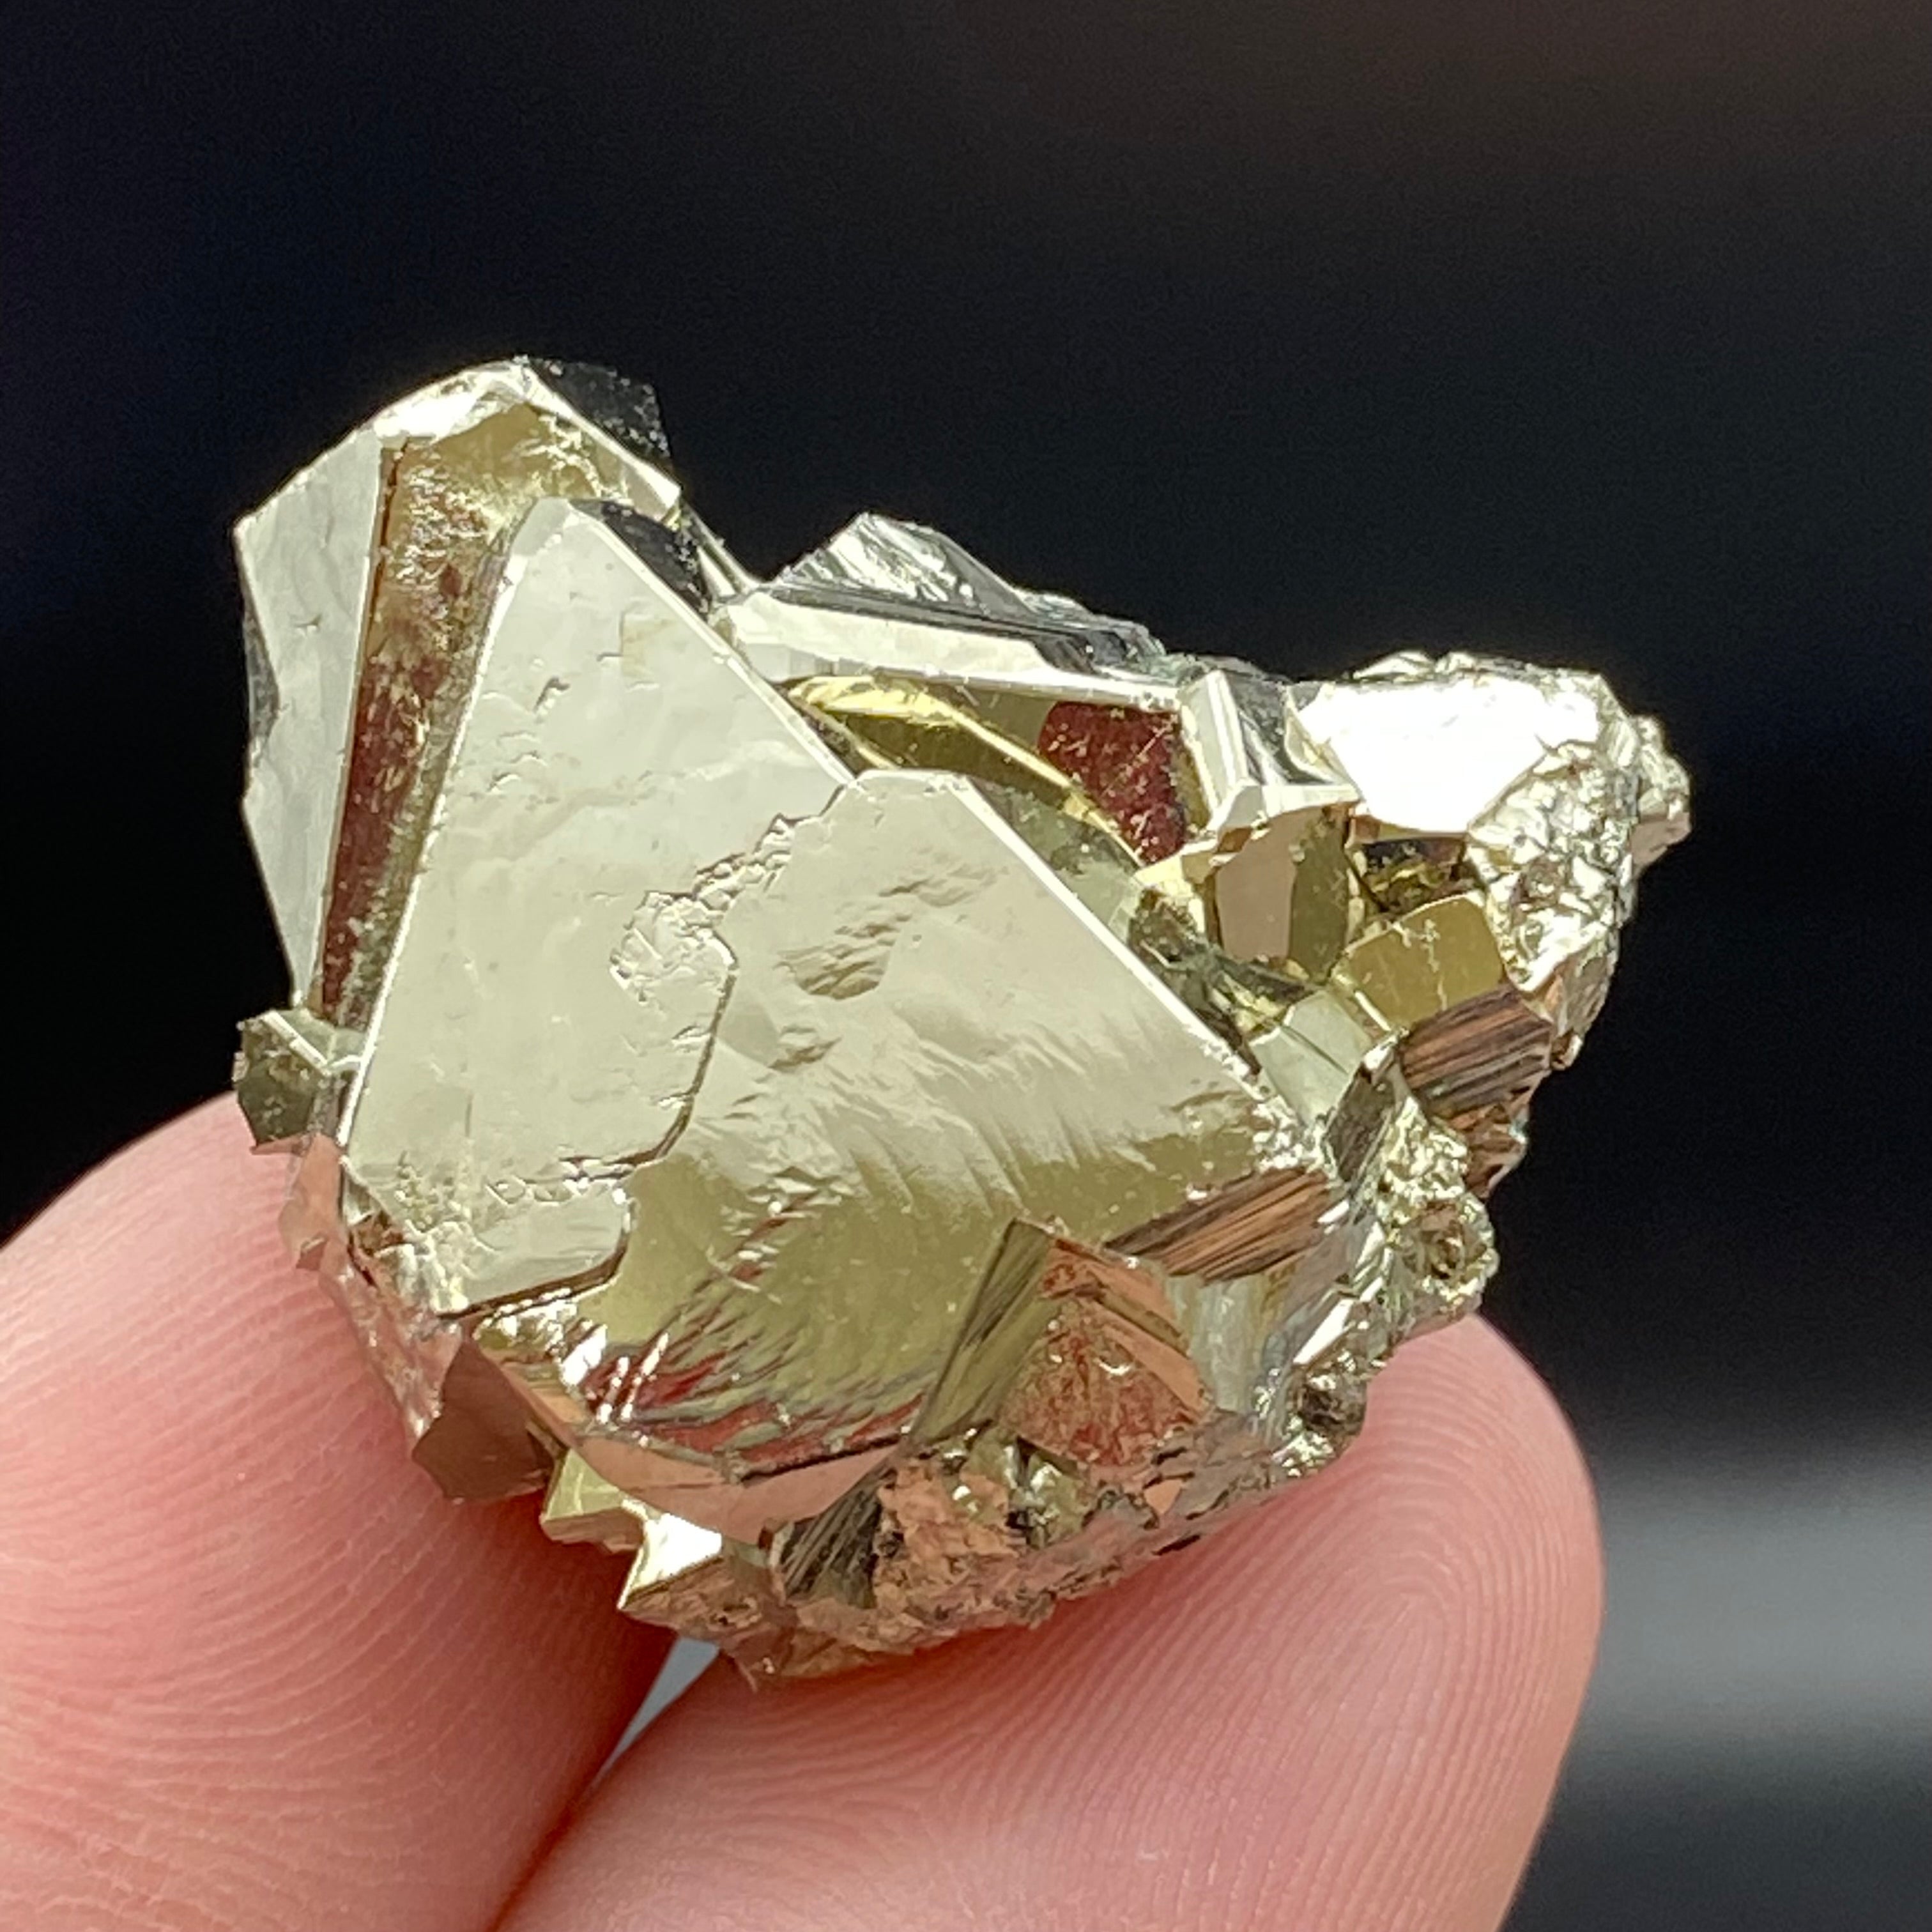 Peruvian Pyrite Crystal - 138